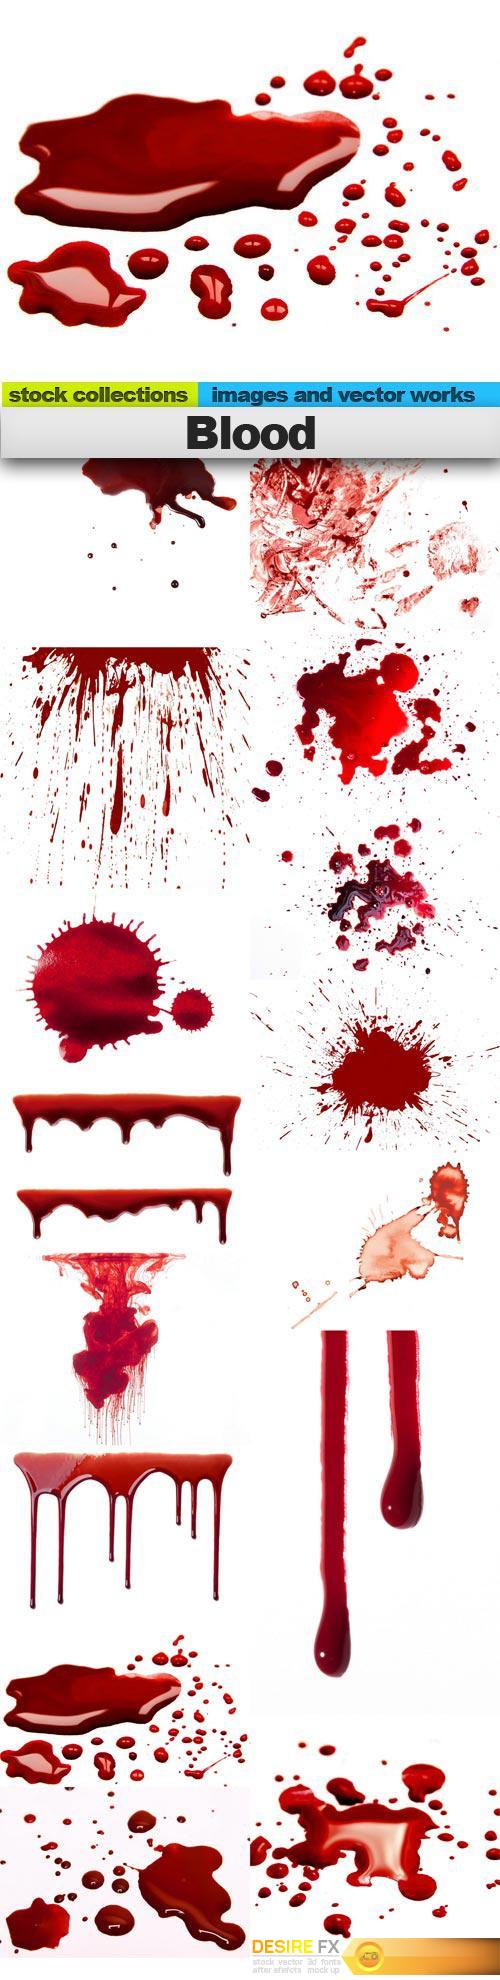 Blood, 15 x UHQ JPEG